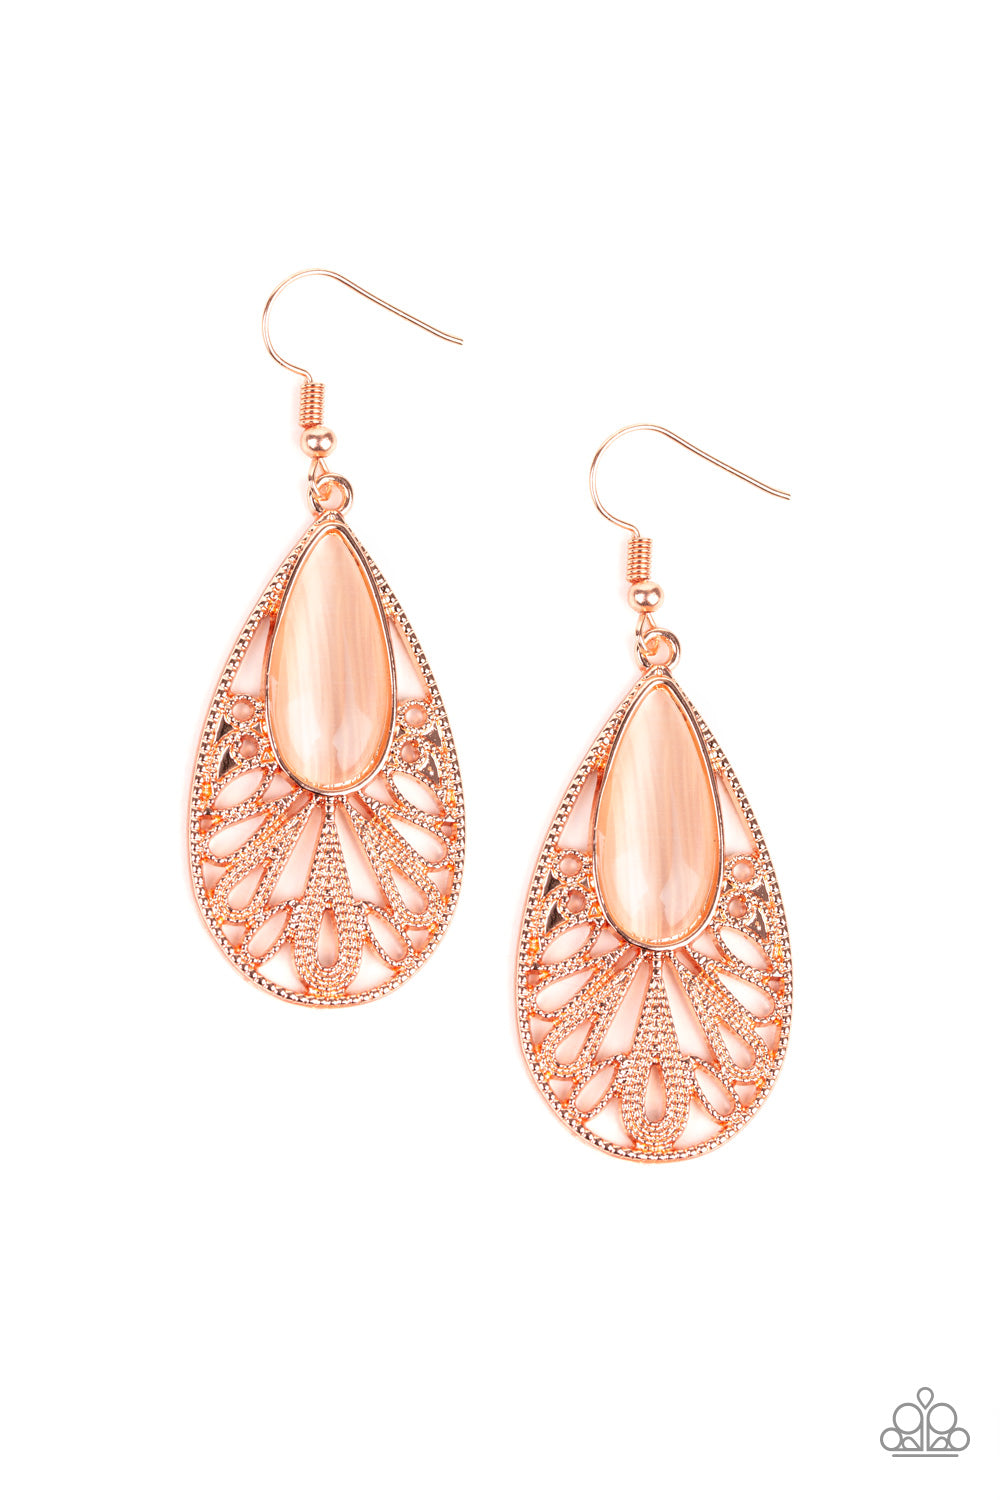 Glowing Tranquility Earrings__Copper